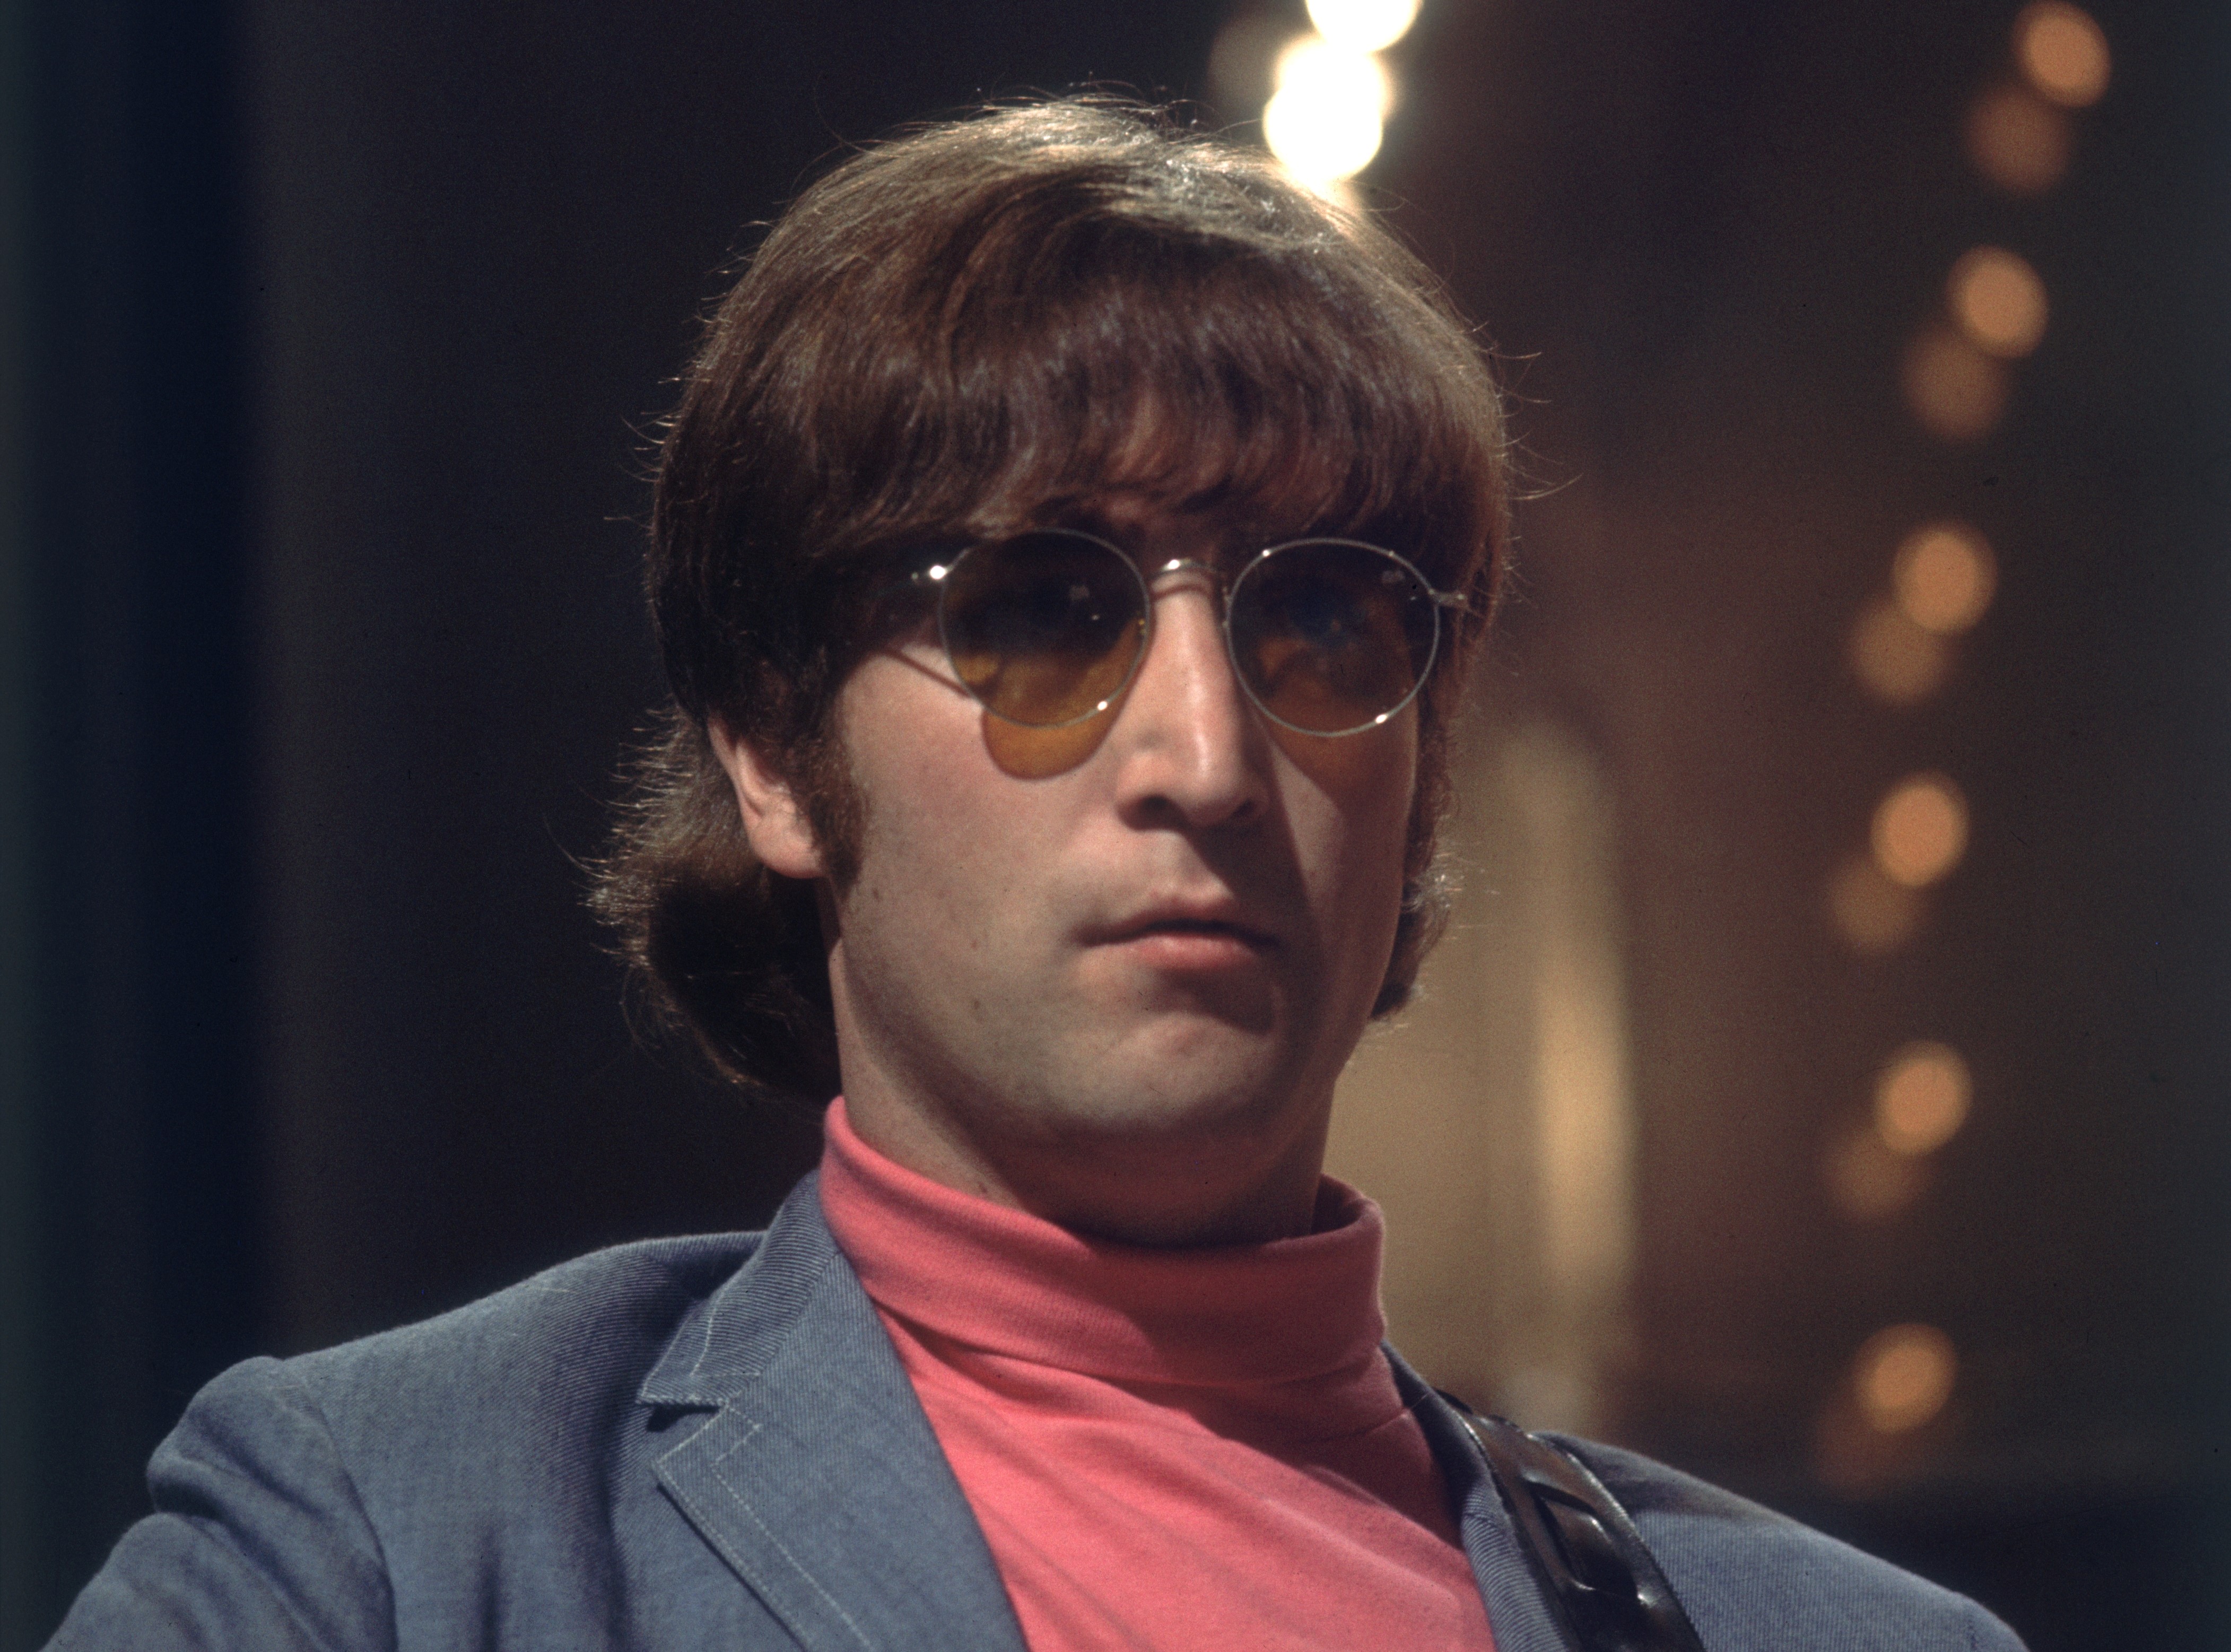 John Lennon wears a red turtleneck, jacket, and sunglasses.